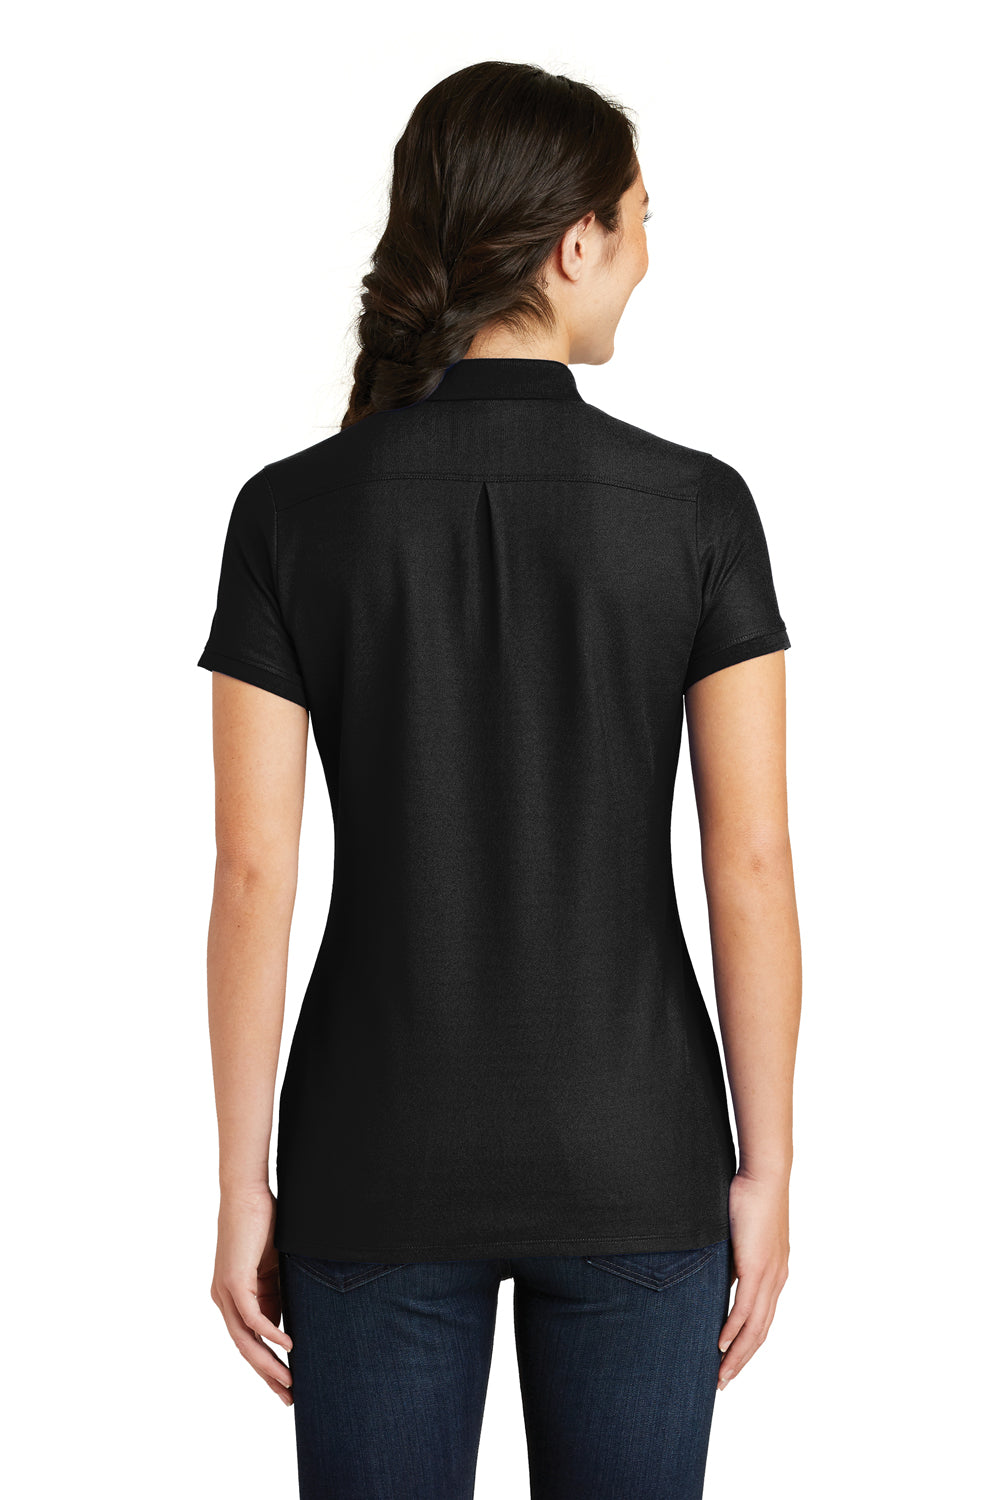 New Era LNEA300 Womens Venue Home Plate Moisture Wicking Short Sleeve Polo Shirt Black Back